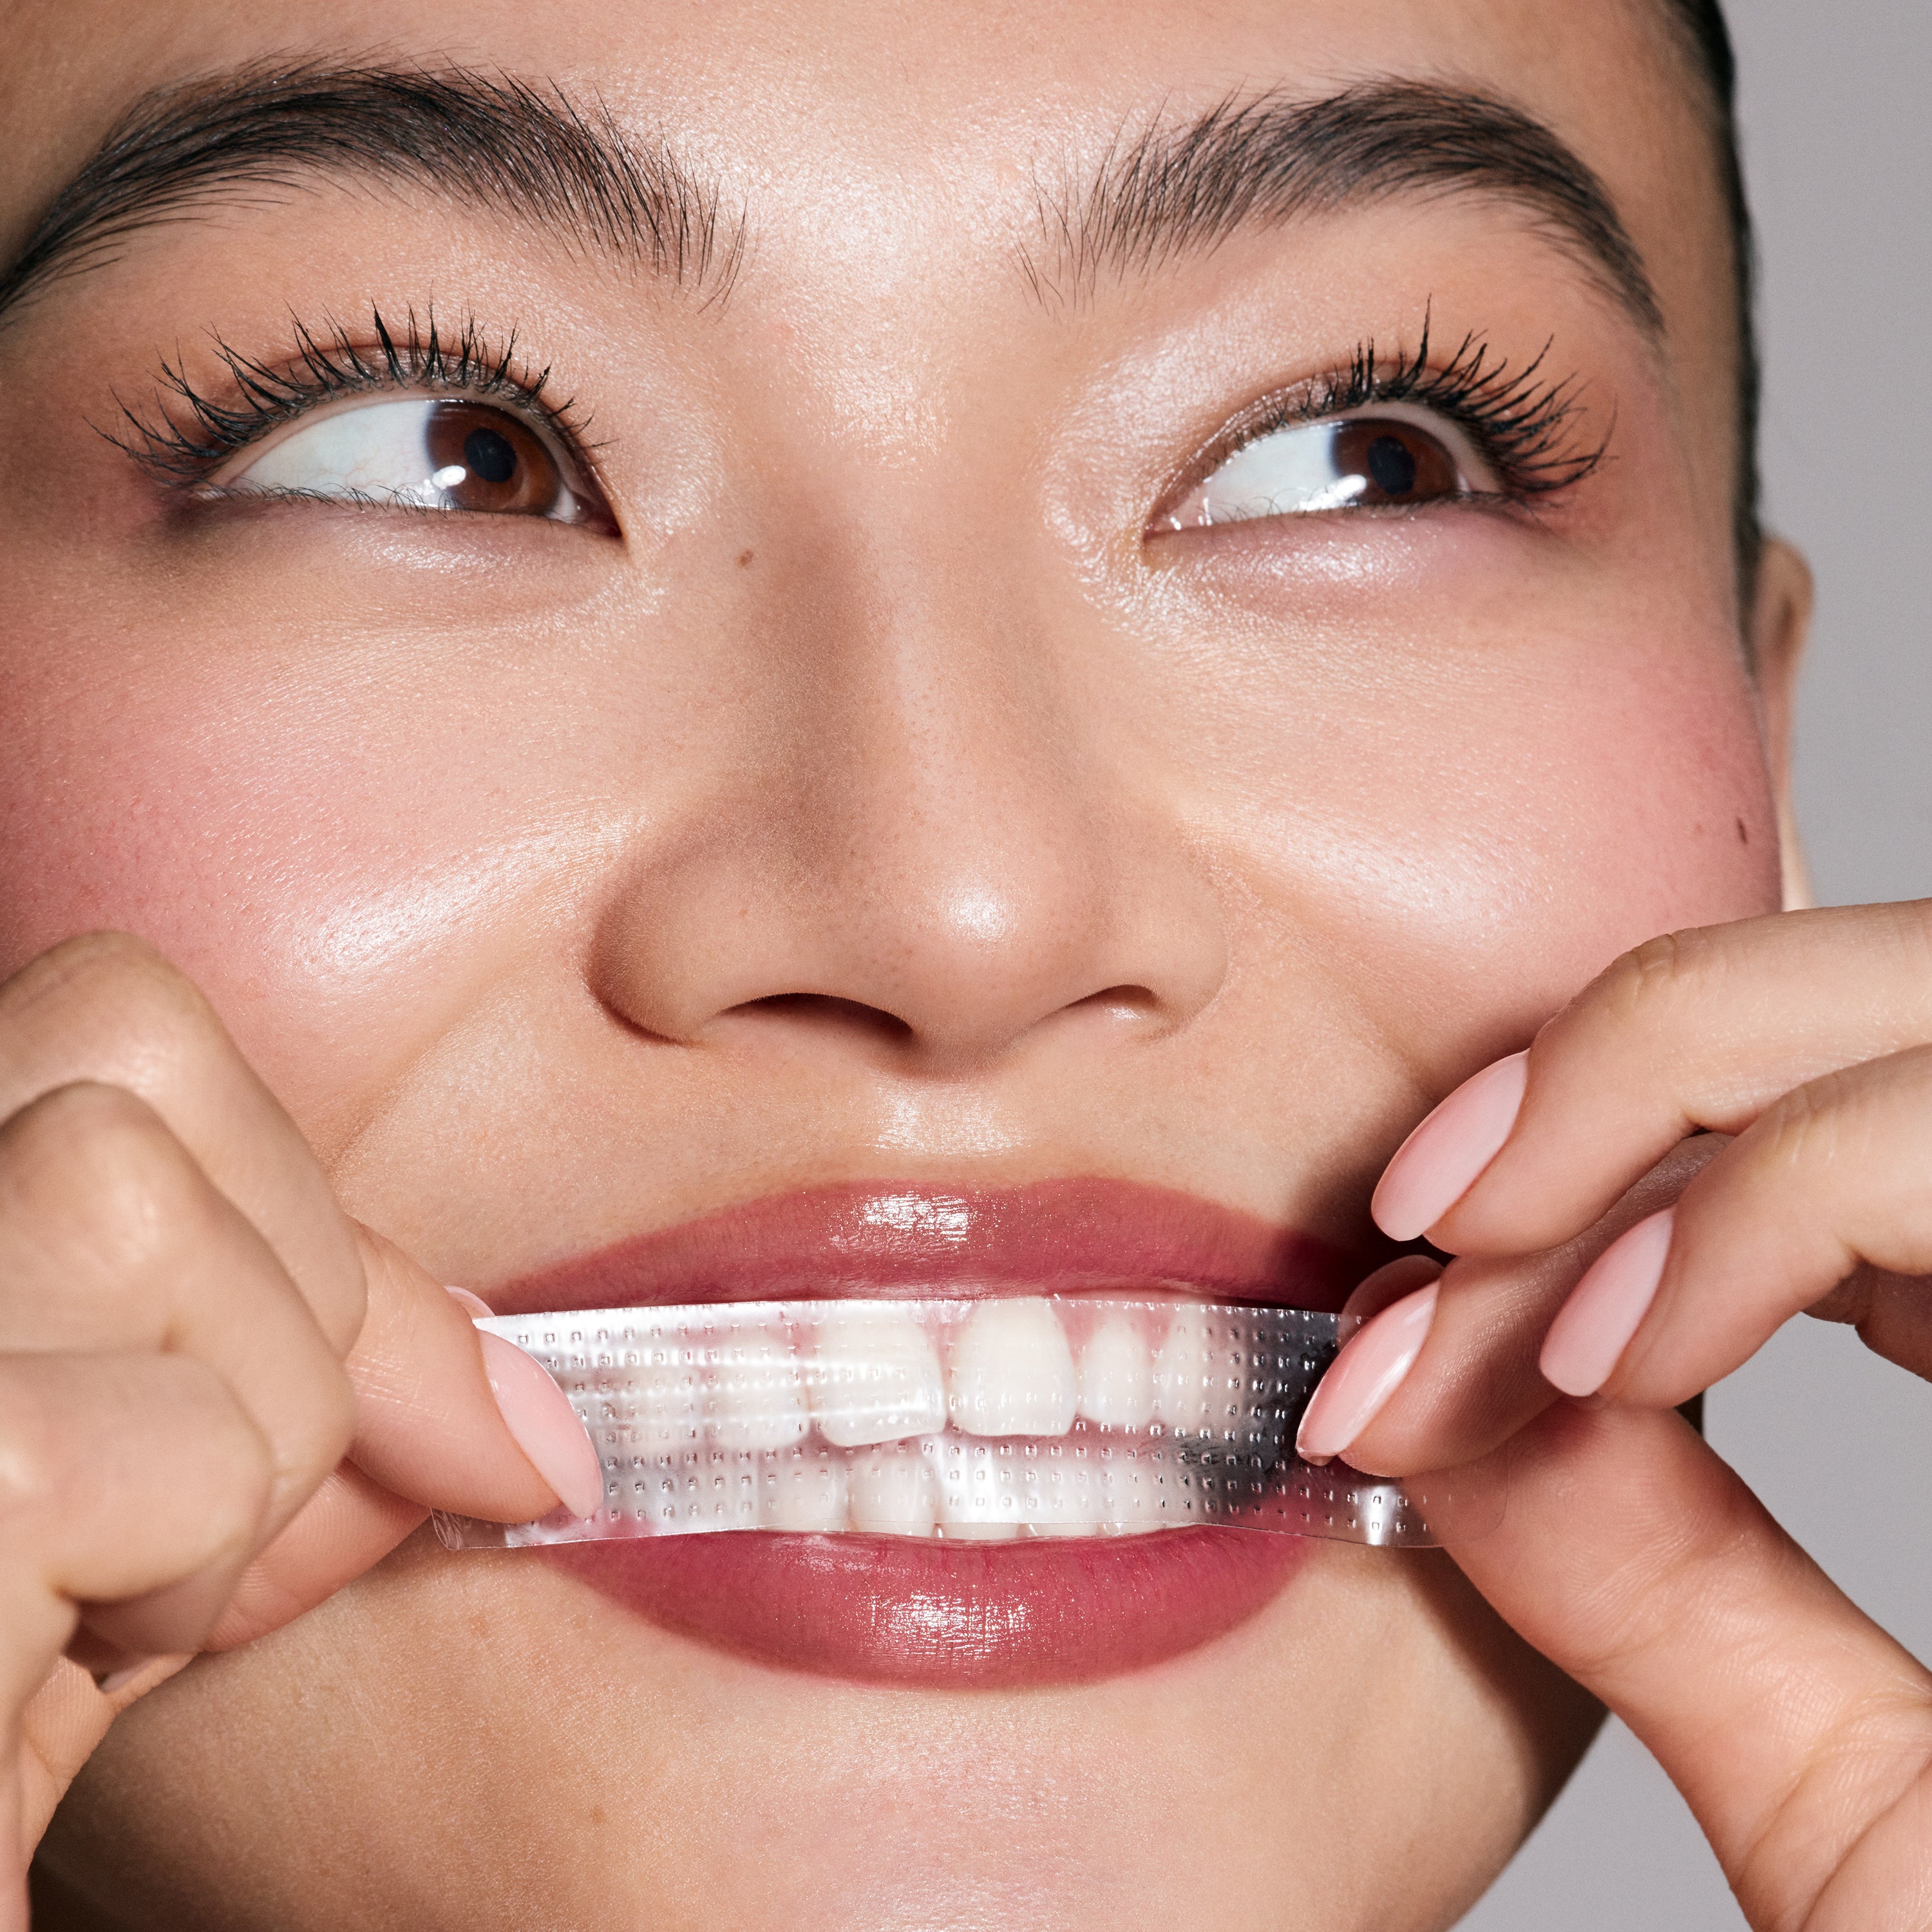 Teeth Whitening Strips & Ultra White Toothpaste